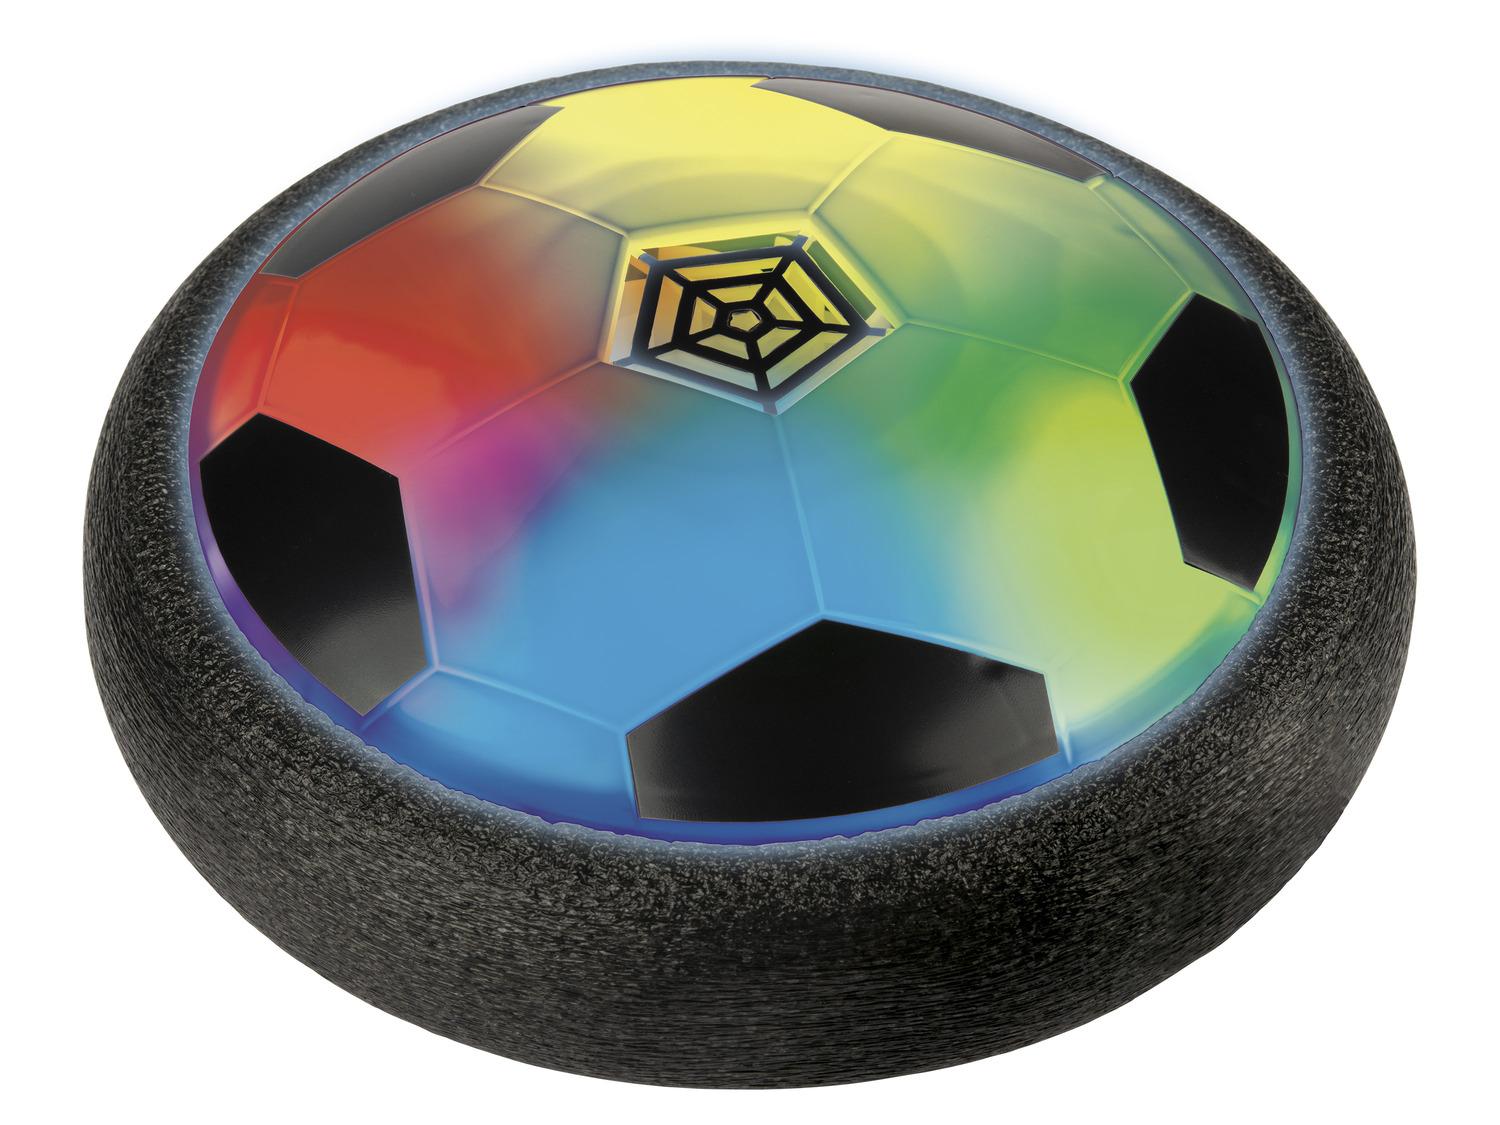 LED LIDL Playtive | Air-Power-Fußball, zuschaltbare